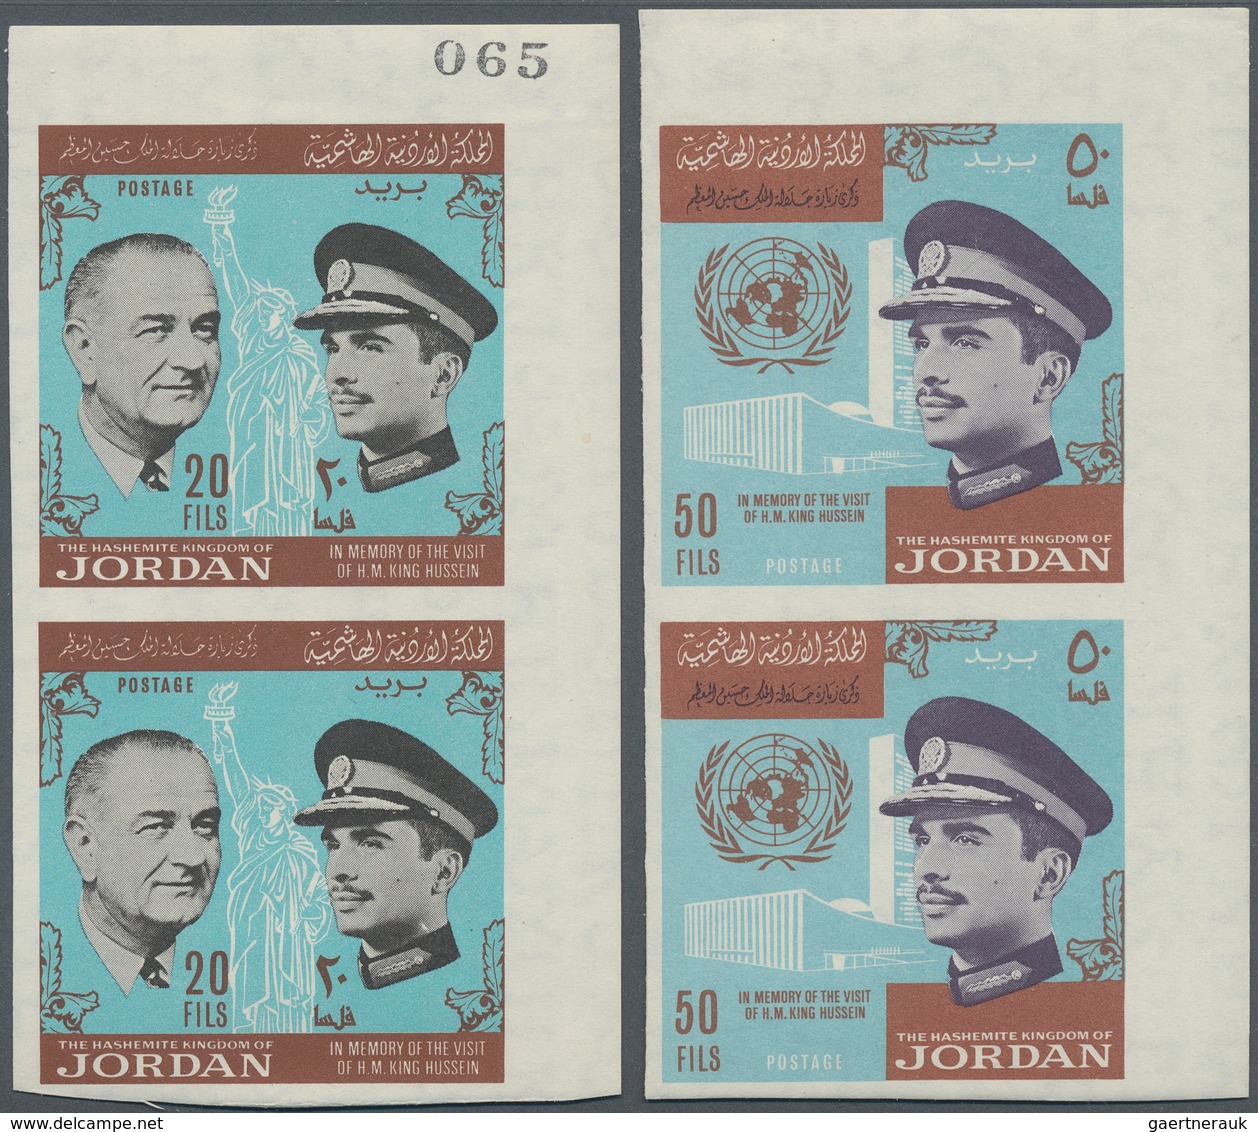 29490 Jordanien: 1960-70, Visit Of Papa Paulus VI, Visit King Hussein In USA, Imperf Sets, Pairs And Block - Jordanien